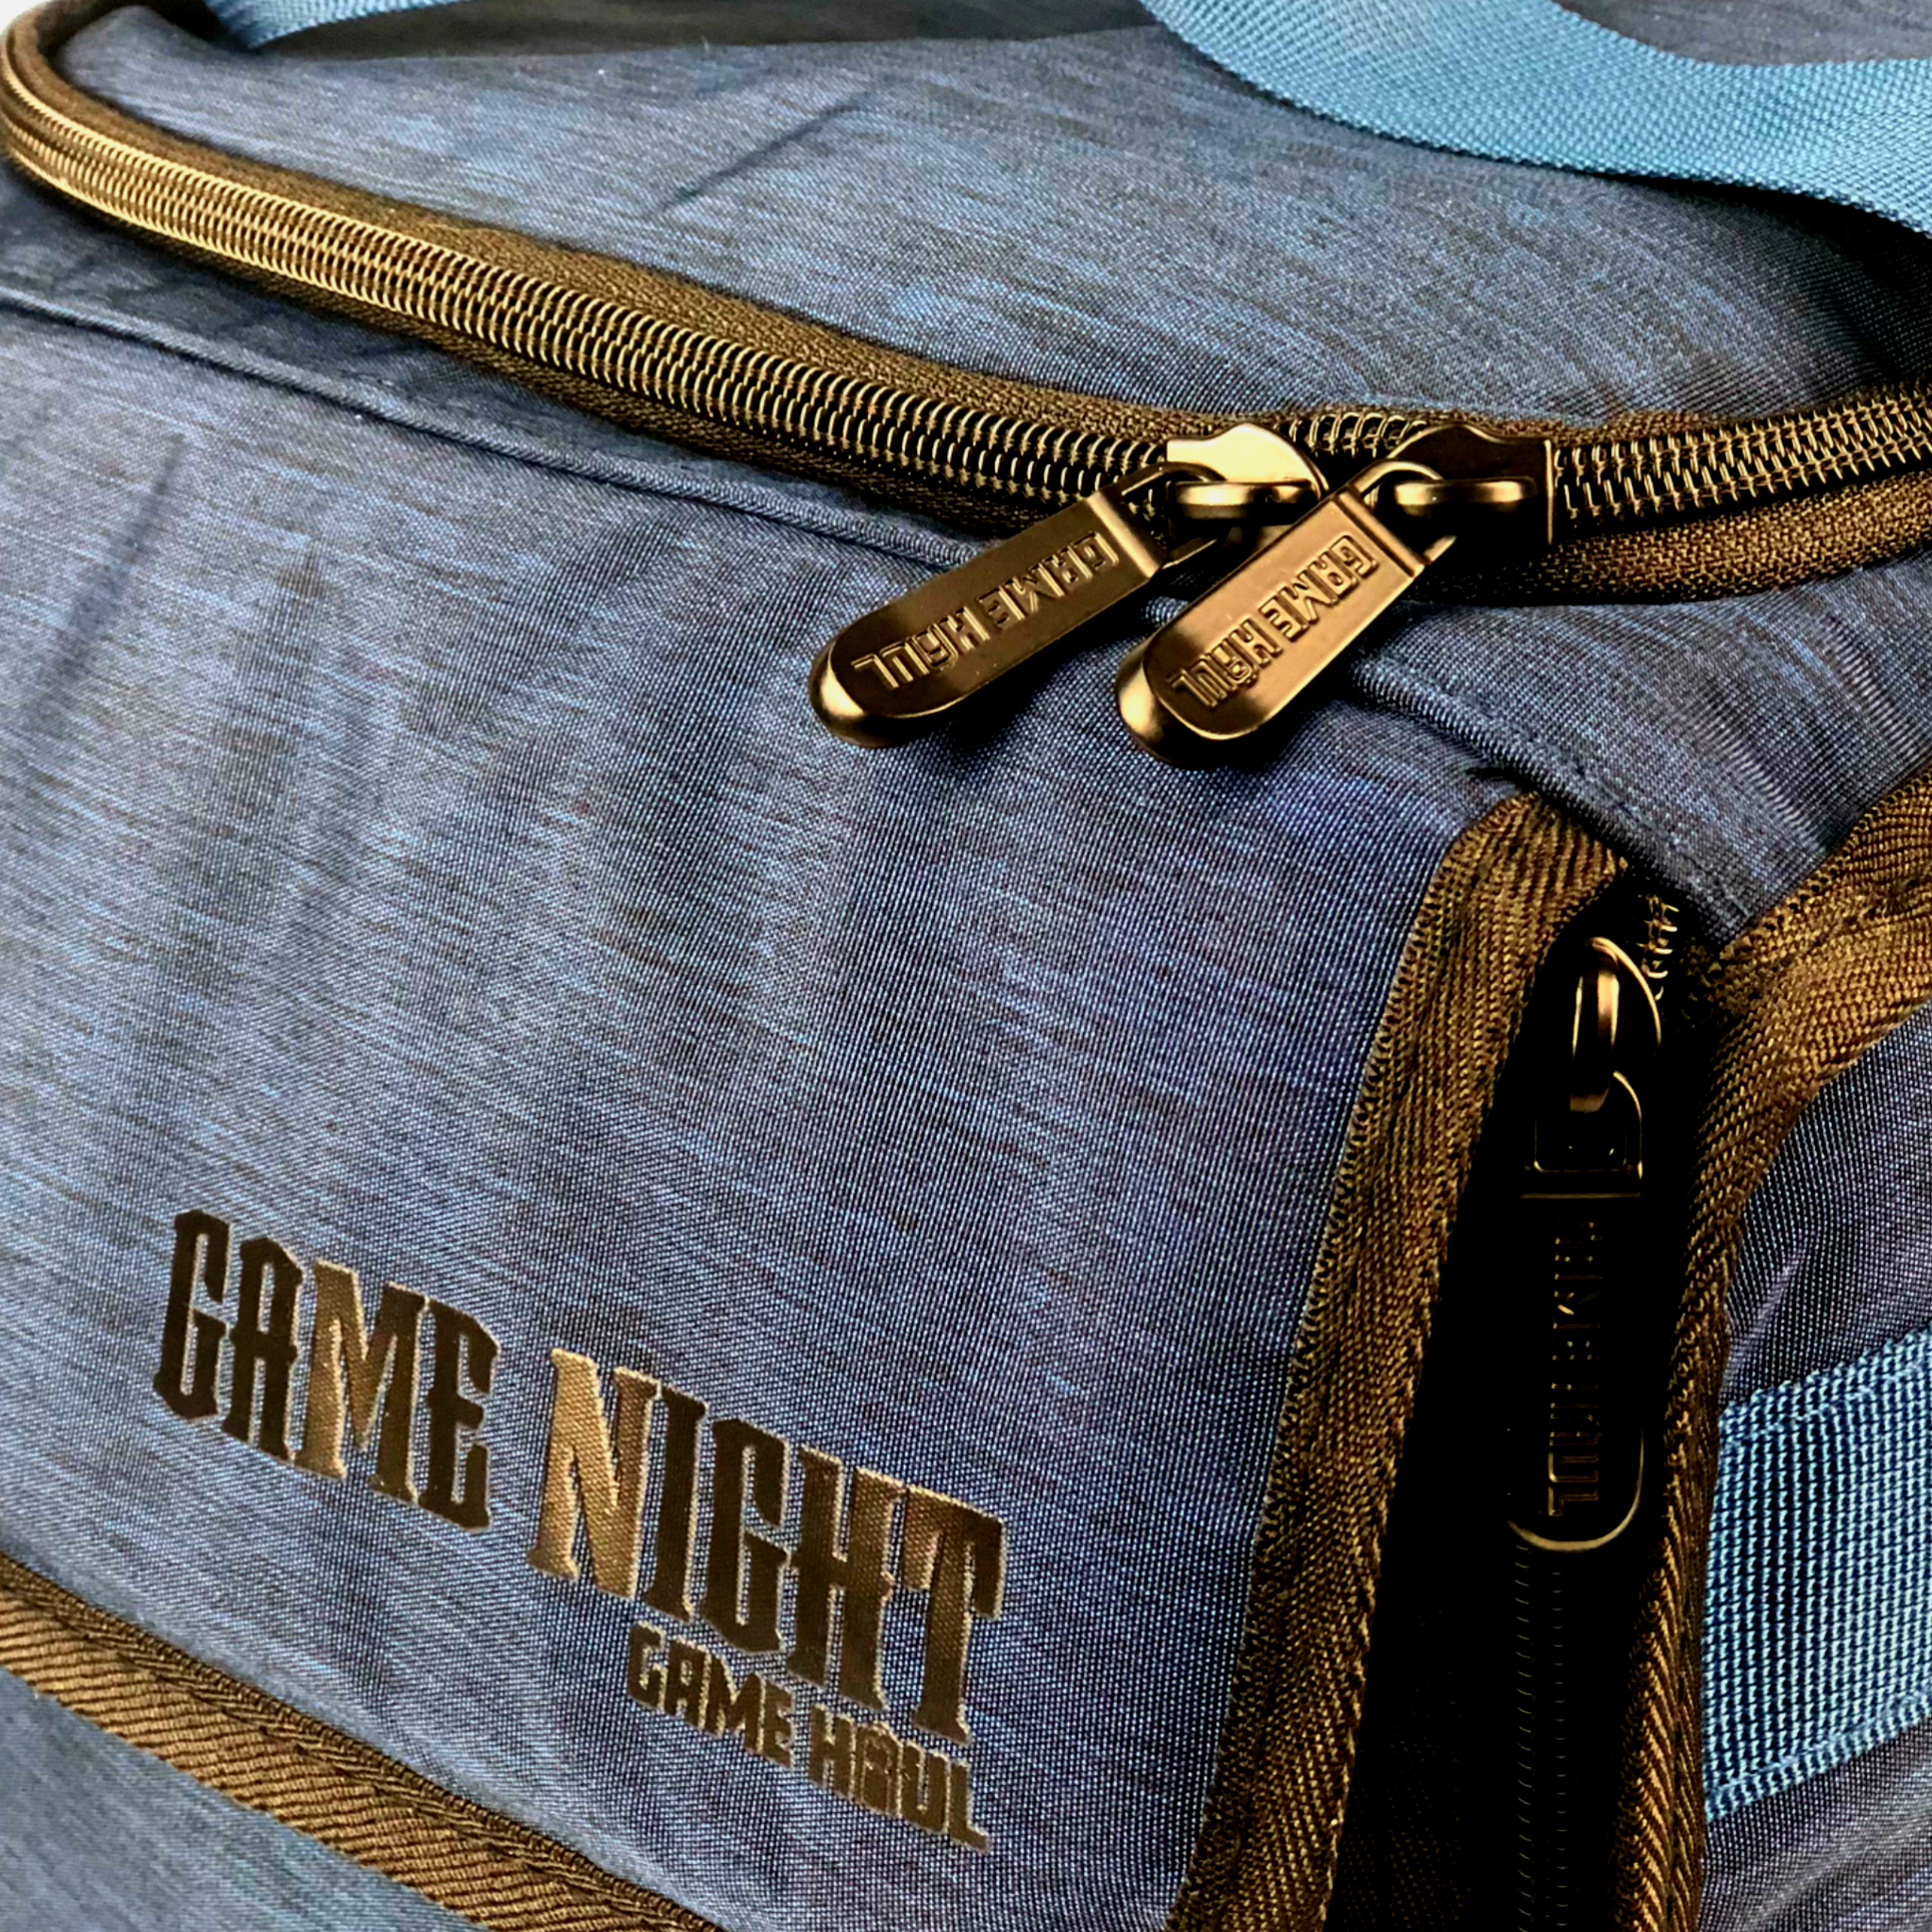 Game Night Bag: Evenfall Blue [PREORDER]